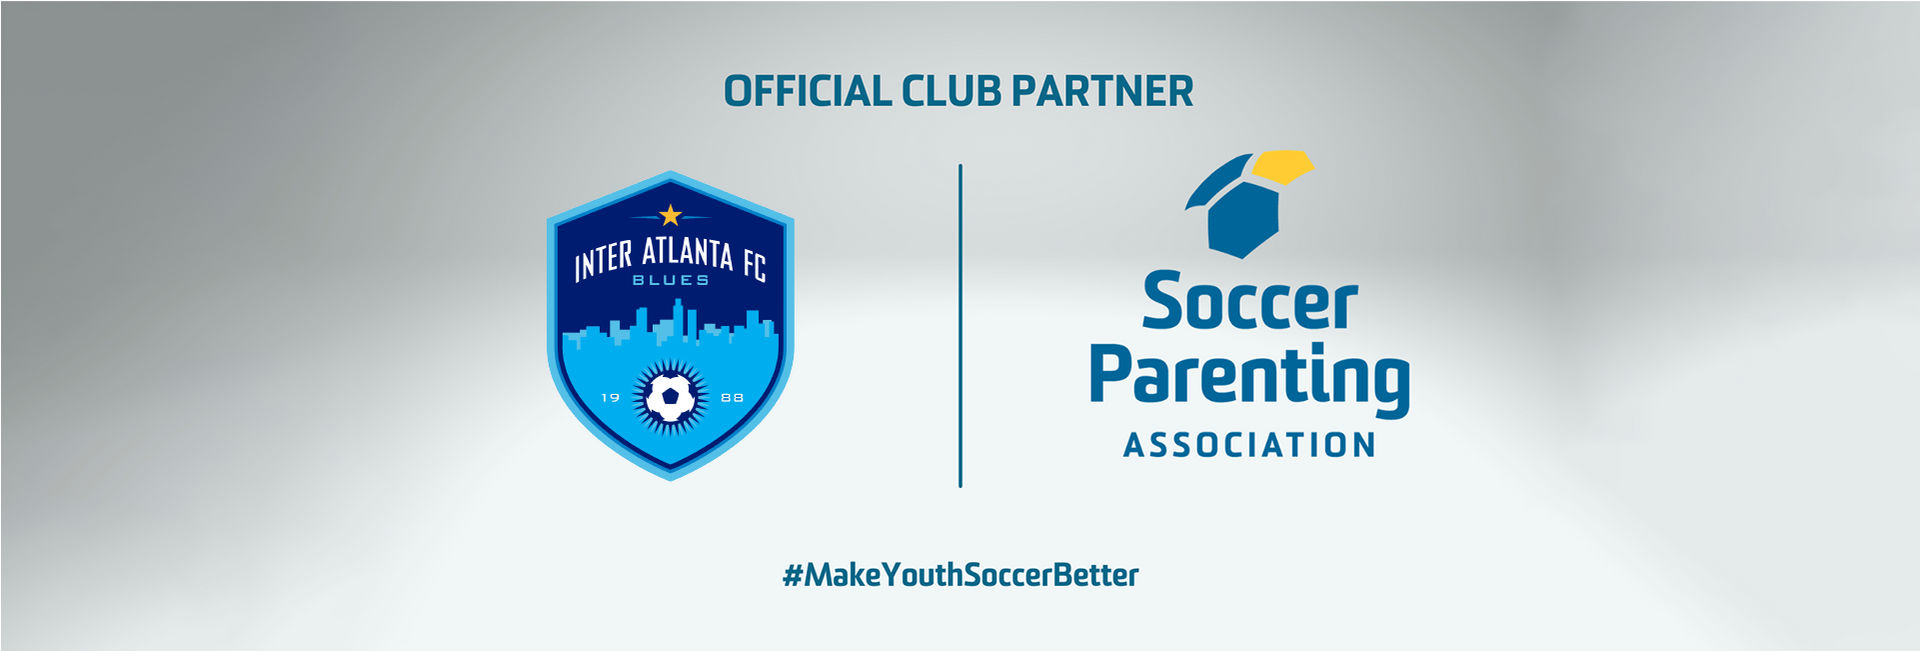 Soccer Parenting Association partner with Inter Atlanta FC